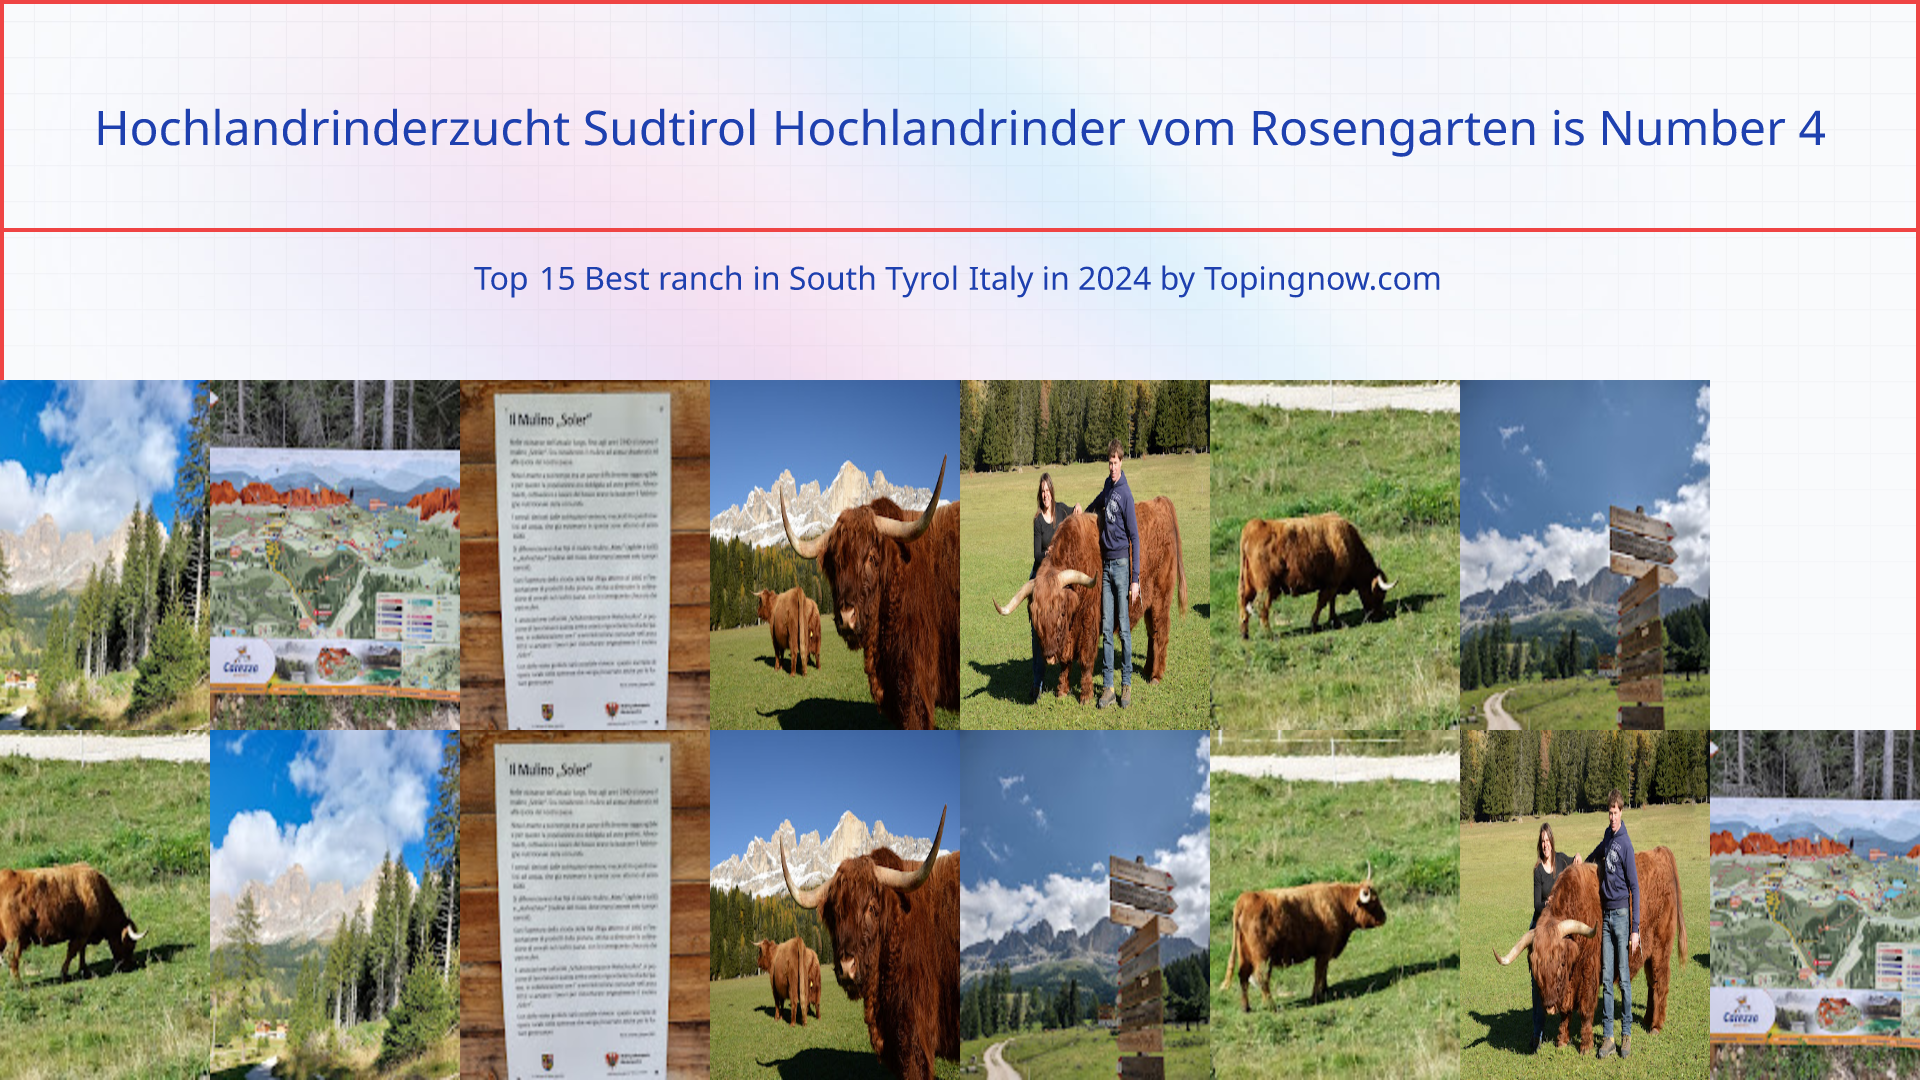 Hochlandrinderzucht Sudtirol Hochlandrinder vom Rosengarten: Top 15 Best ranch in South Tyrol Italy in 2024